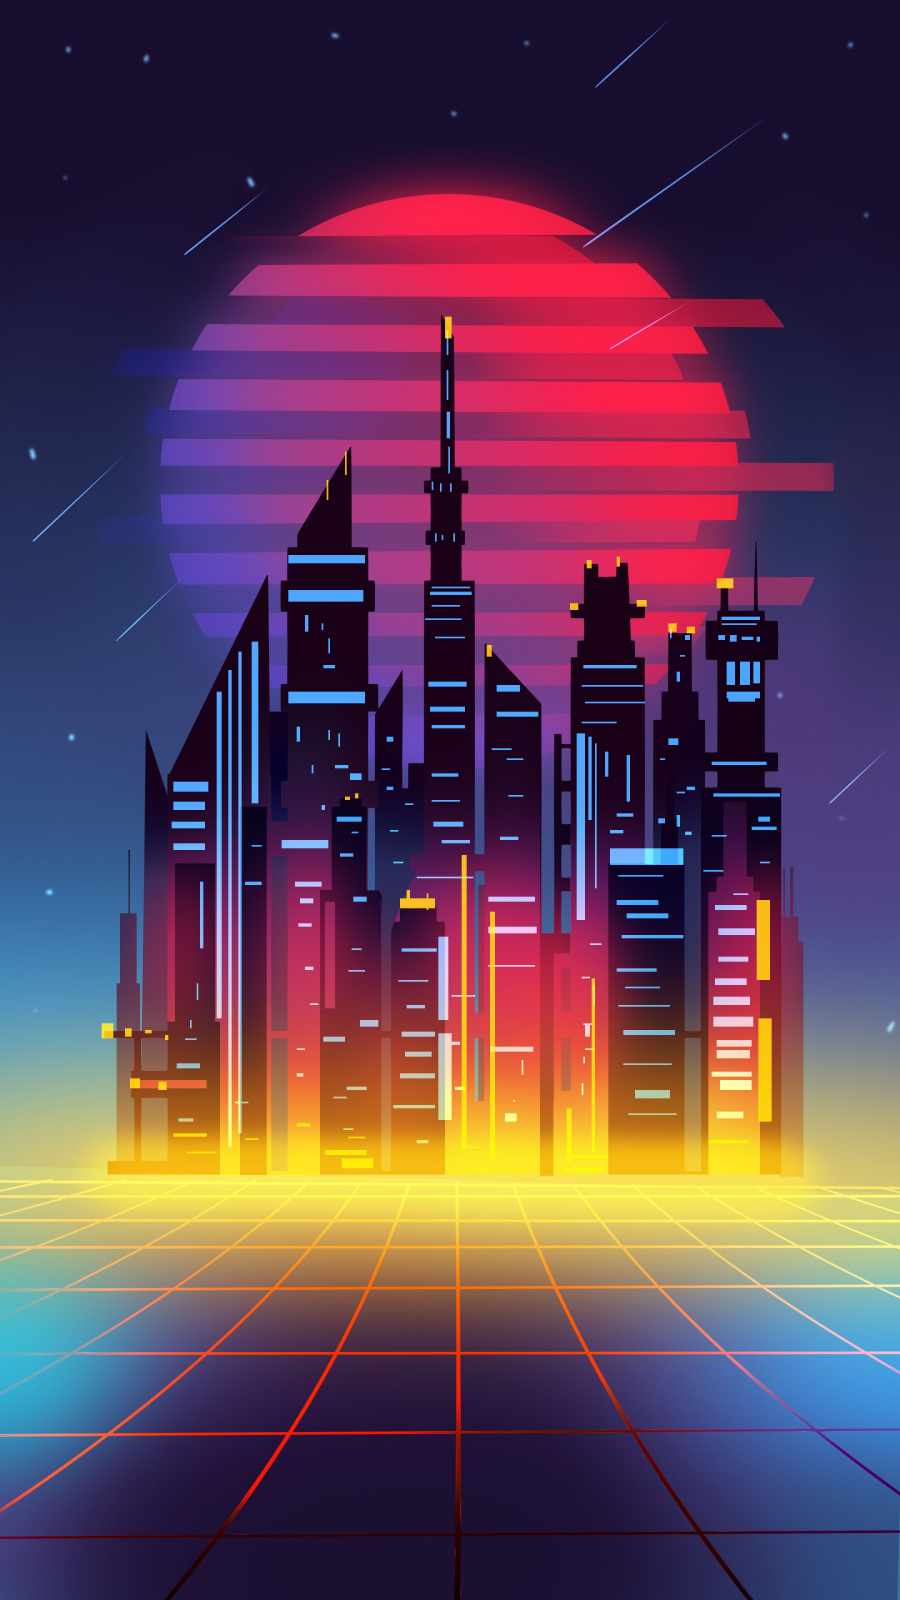 Cyber City iPhone Wallpaper